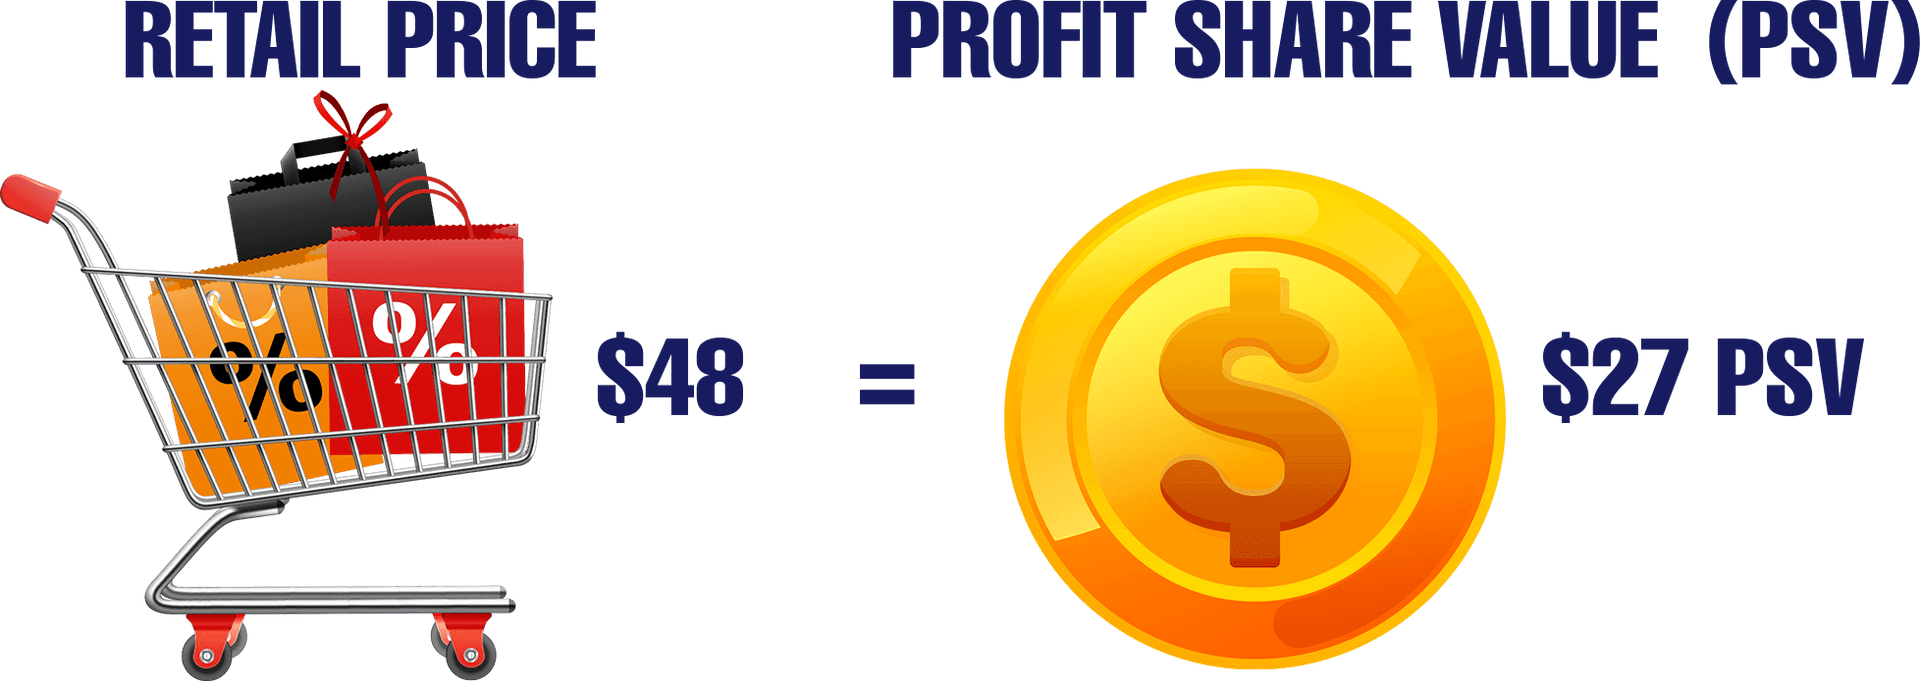 Retail Pricevs Profit Share Value PNG image